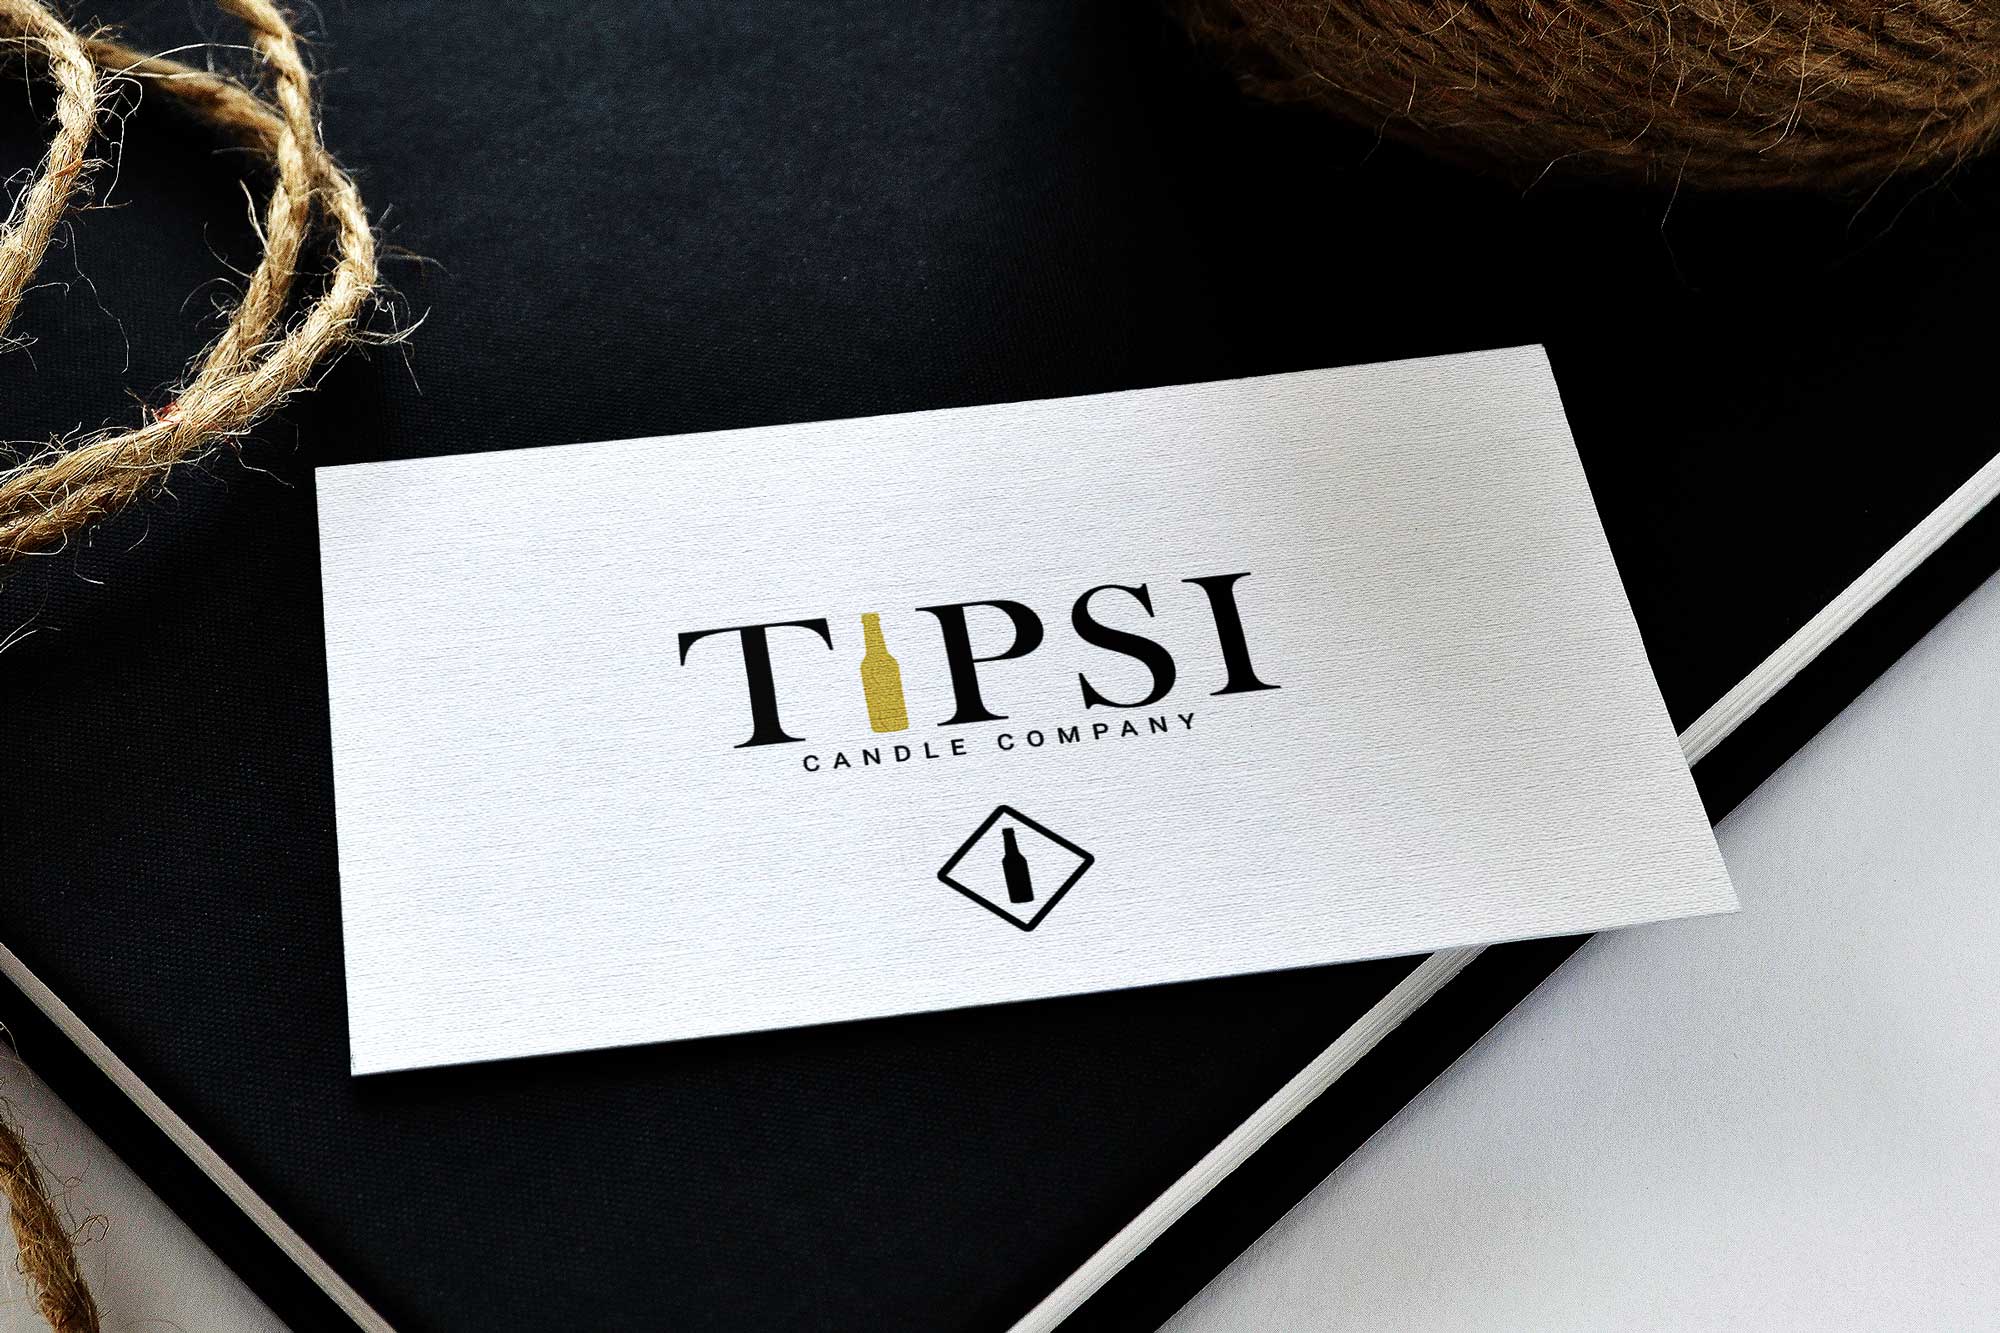 Tipsi Business Card Mockup